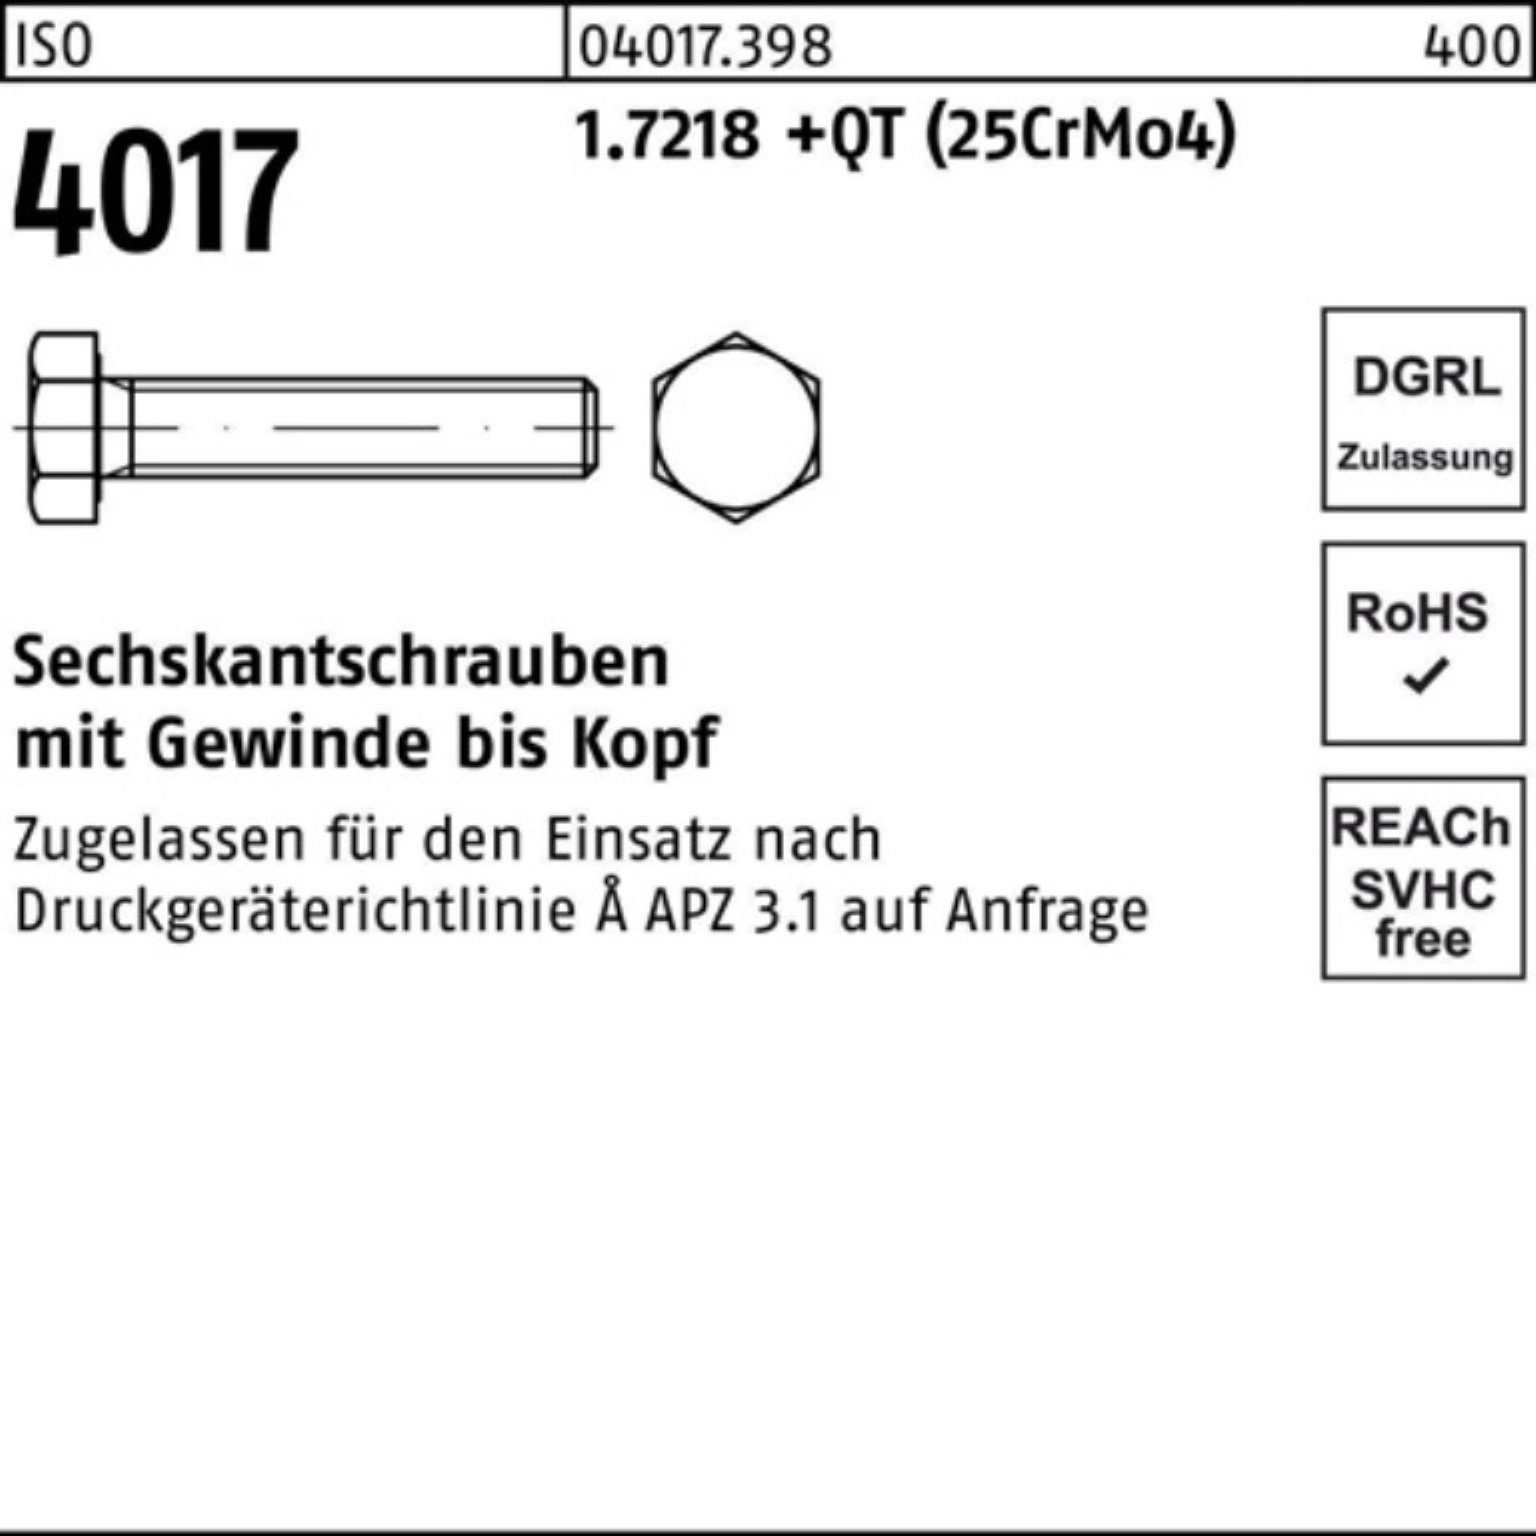 +QT Sechskantschraube 1.7218 Bufab 45 (25CrMo4) M24x 4017 ISO 100er Sechskantschraube VG Pack